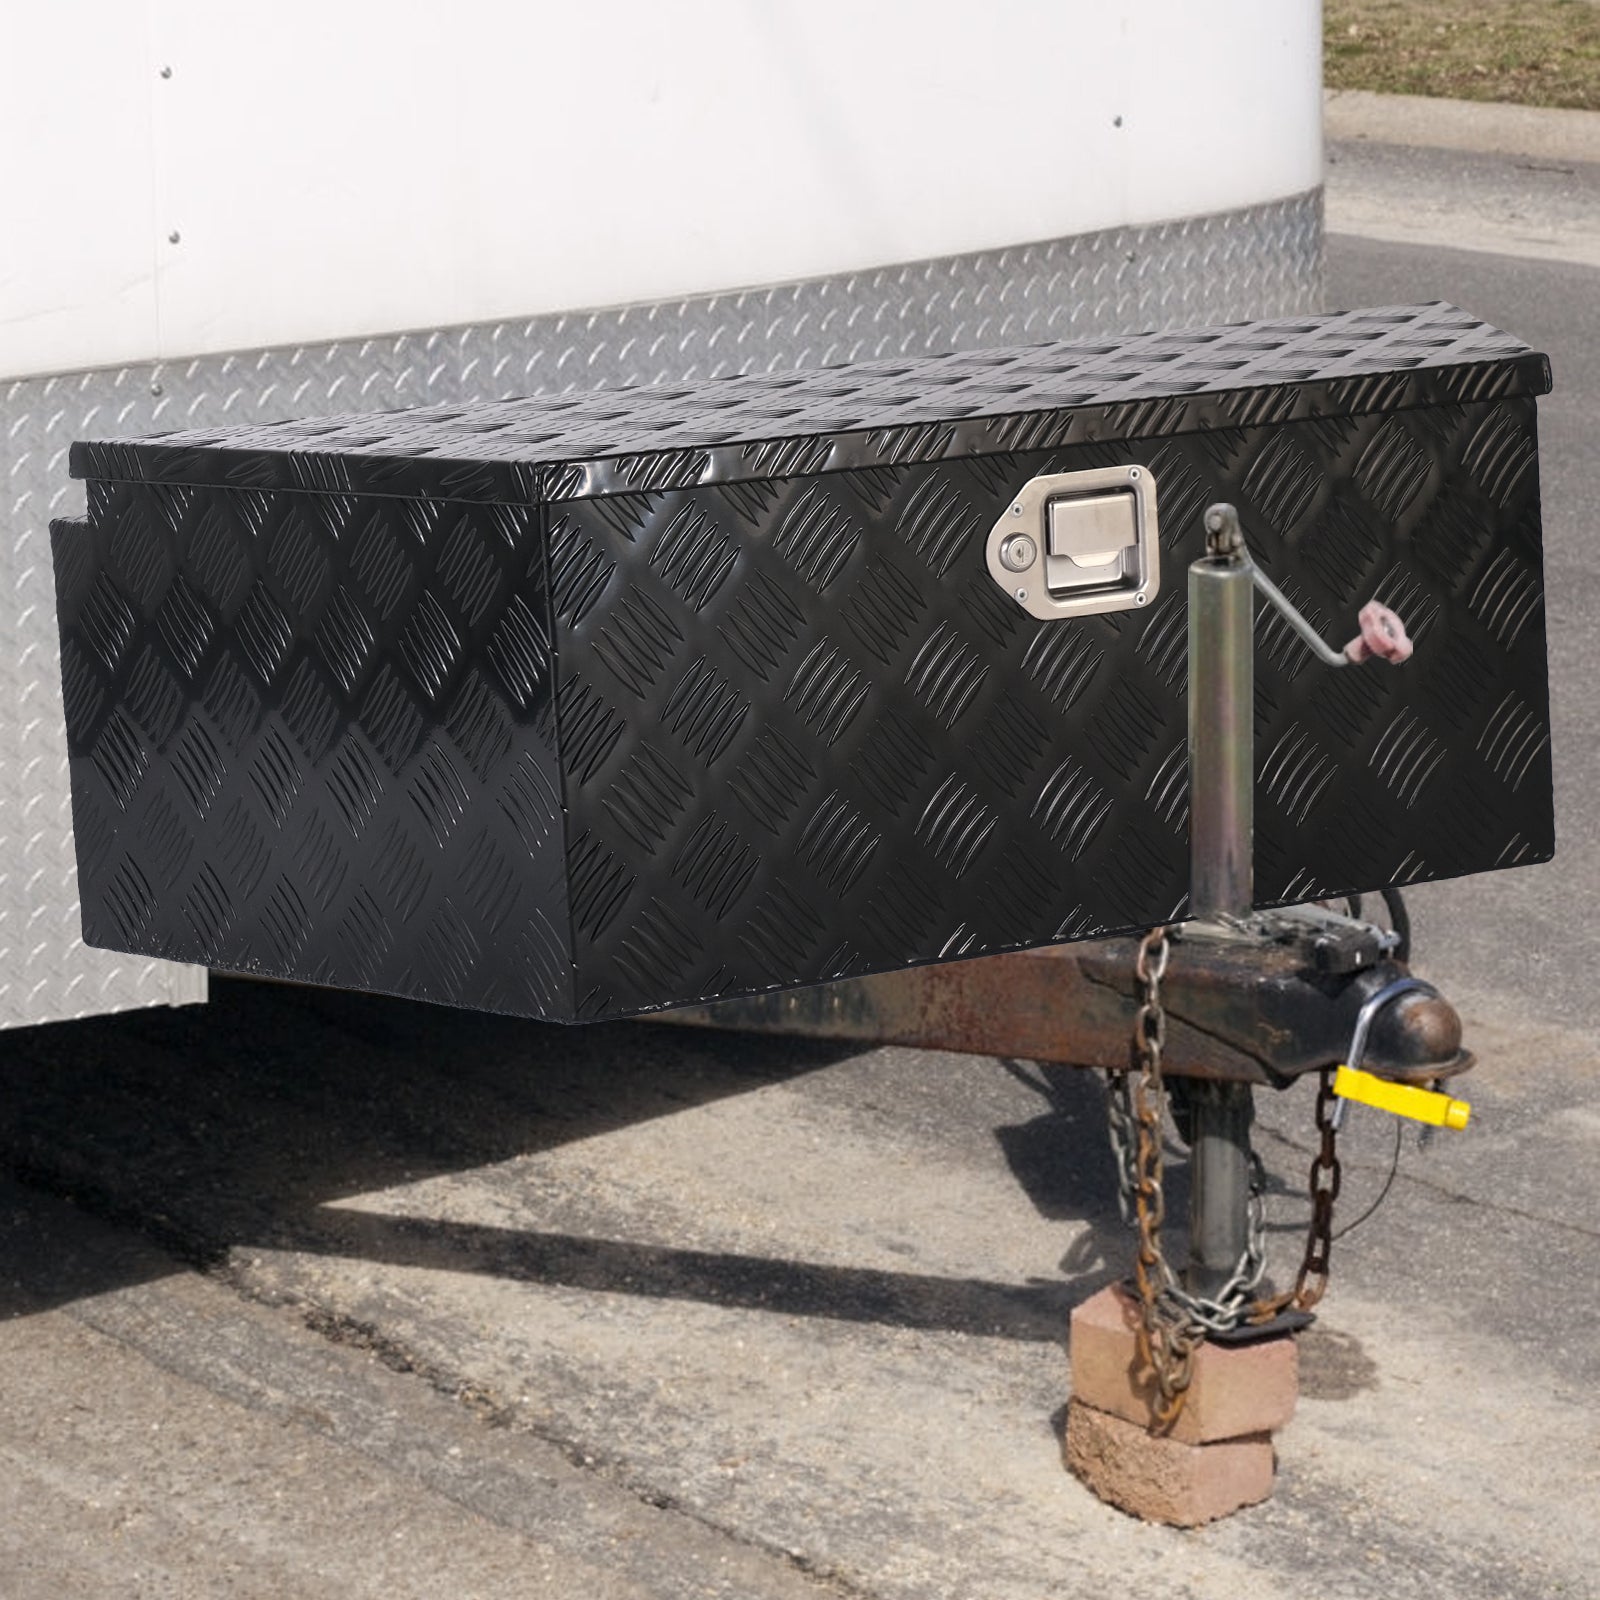 39" Trailer Tongue Box Aluminum Truck Tool Cargo Storage Box Storage Organizer with Lock, Black